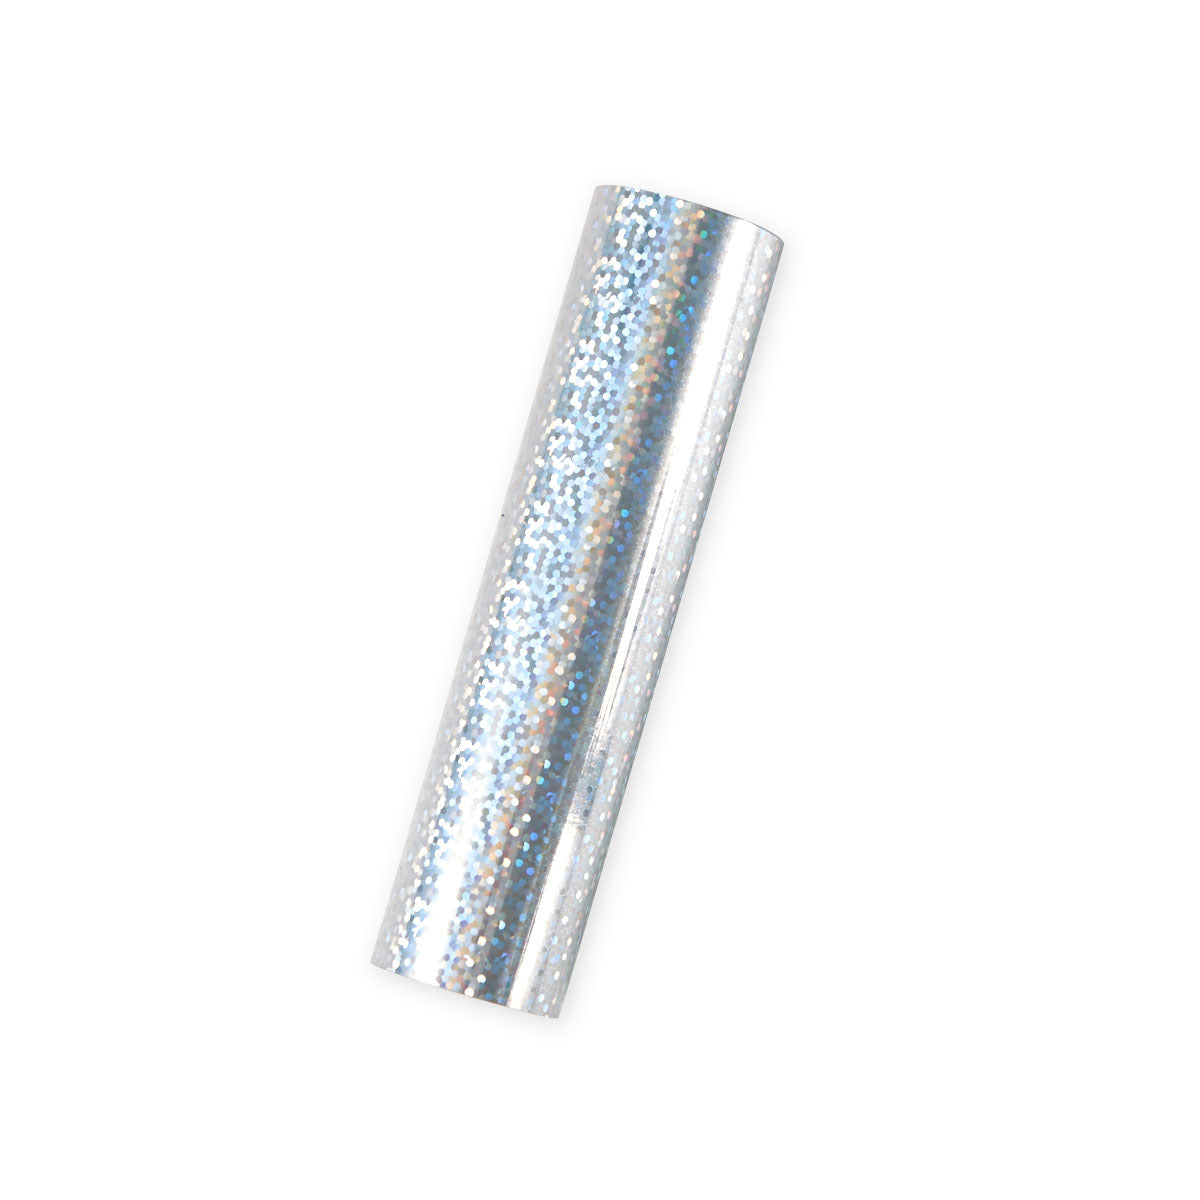 Spellbinders Glimmer Hot Foil Roll - Speckled Prism - Crafty Meraki